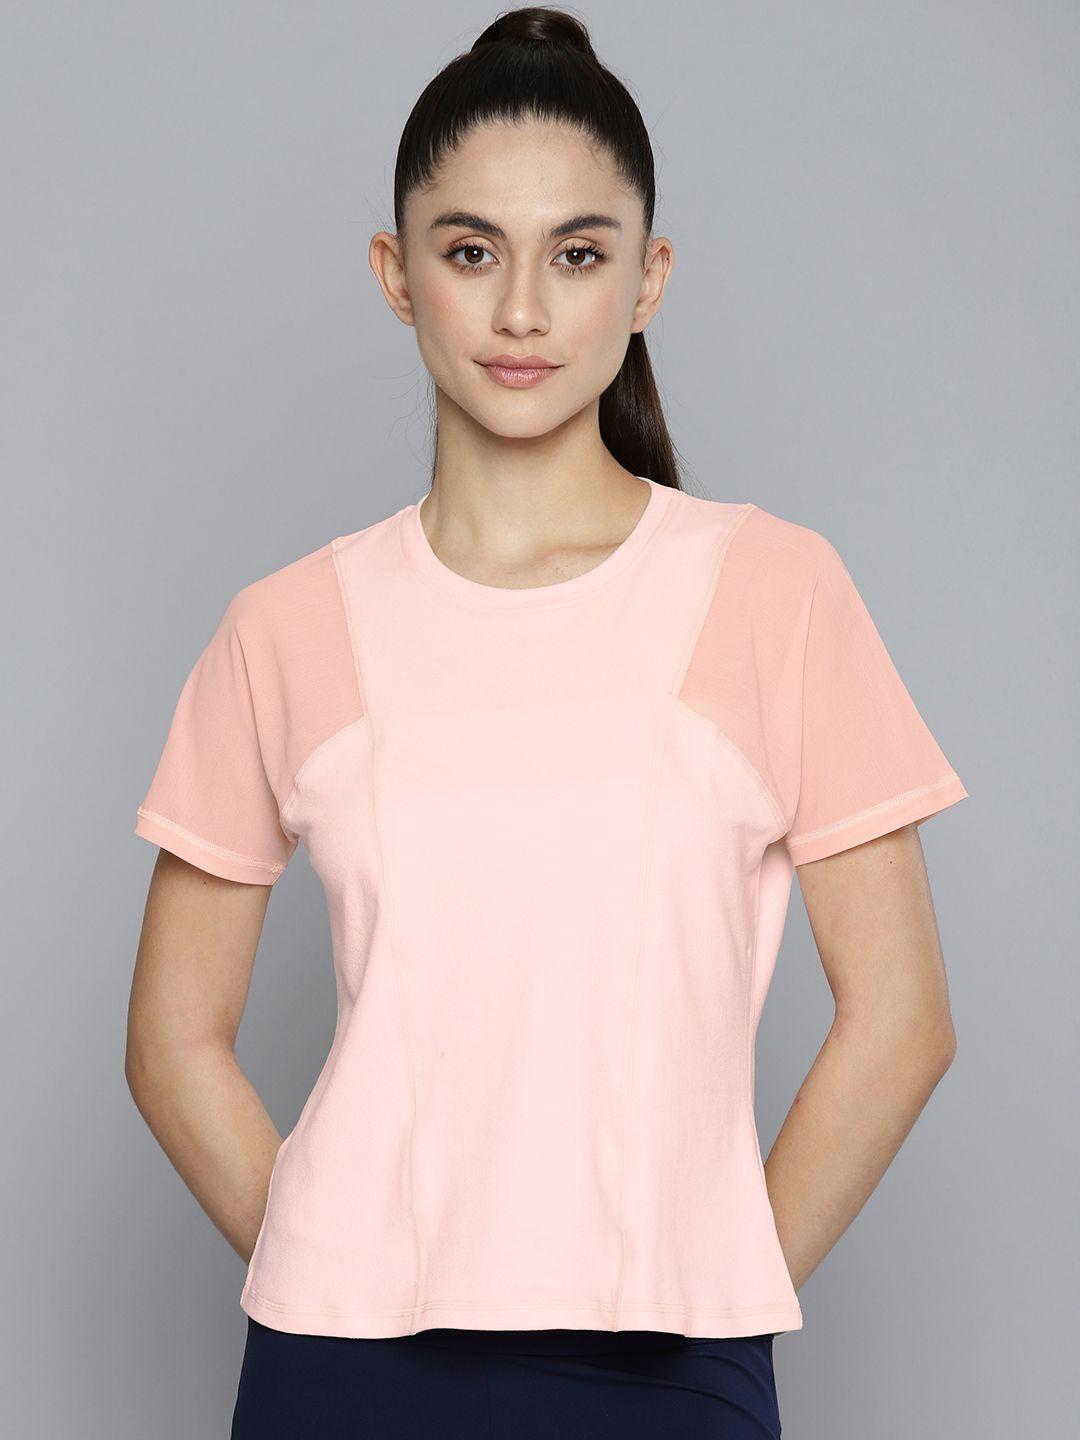 fitkin women pink anti odour running t-shirt